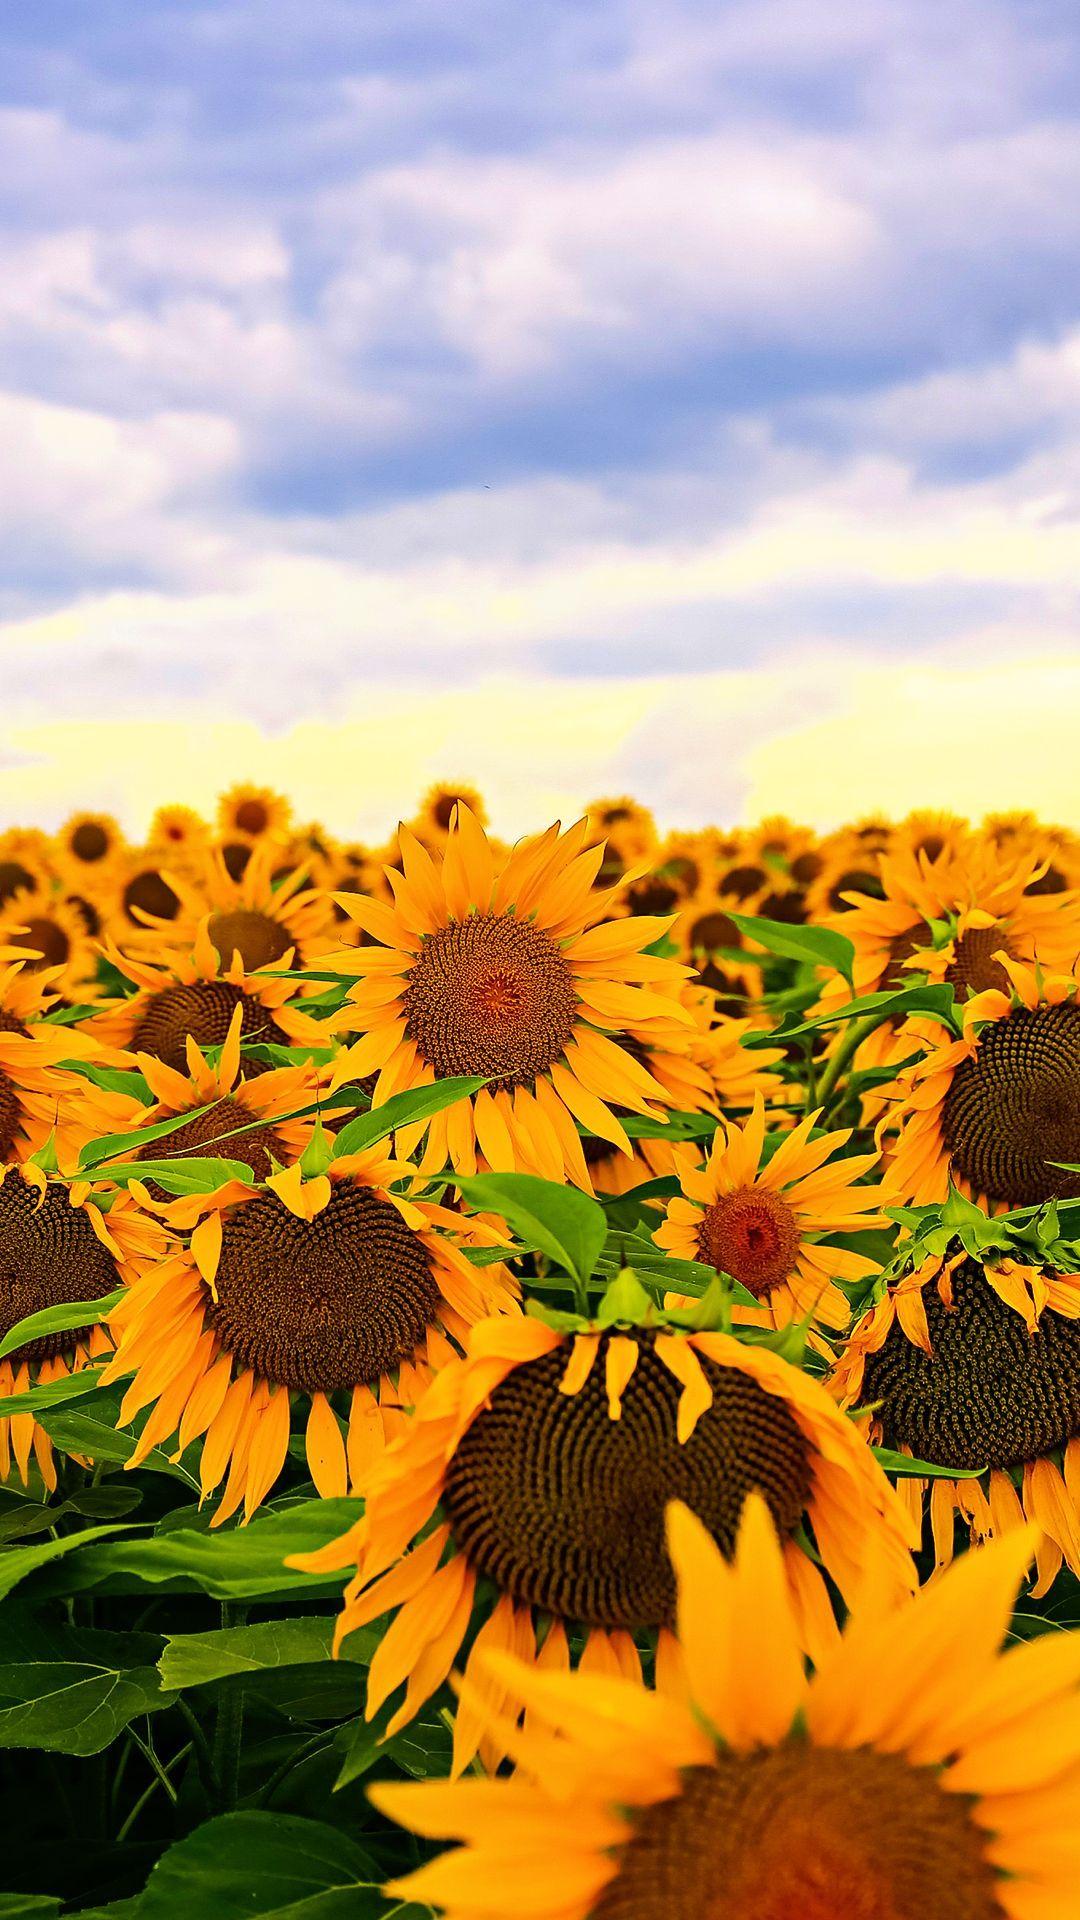 Cute Sunflower Wallpapers - Top Free Cute Sunflower Backgrounds